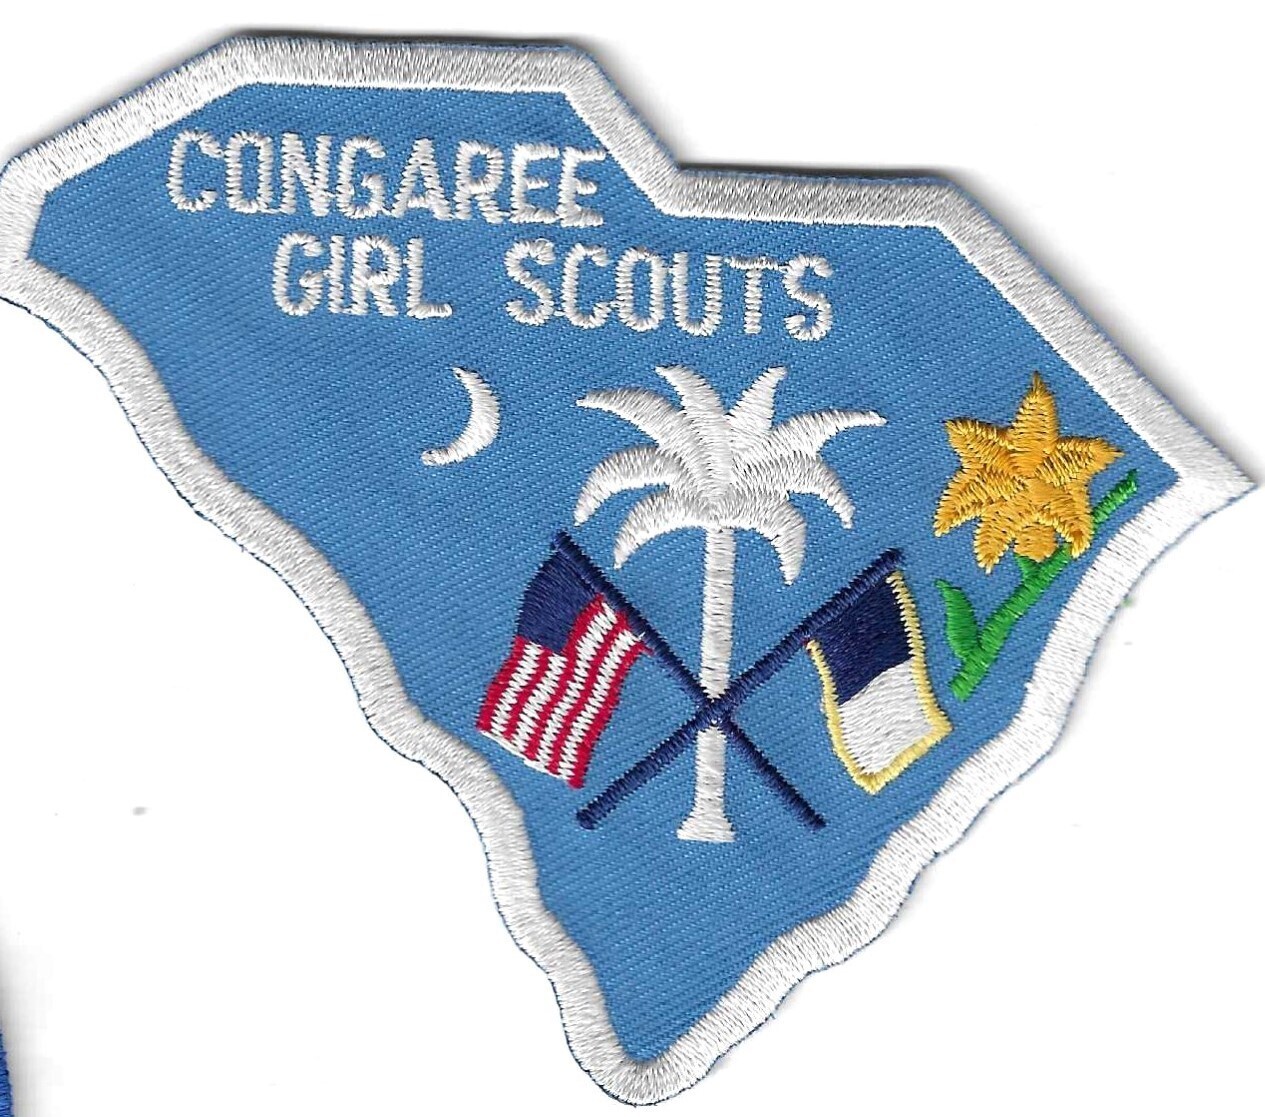 Congaree GS council patch (S Carolina)